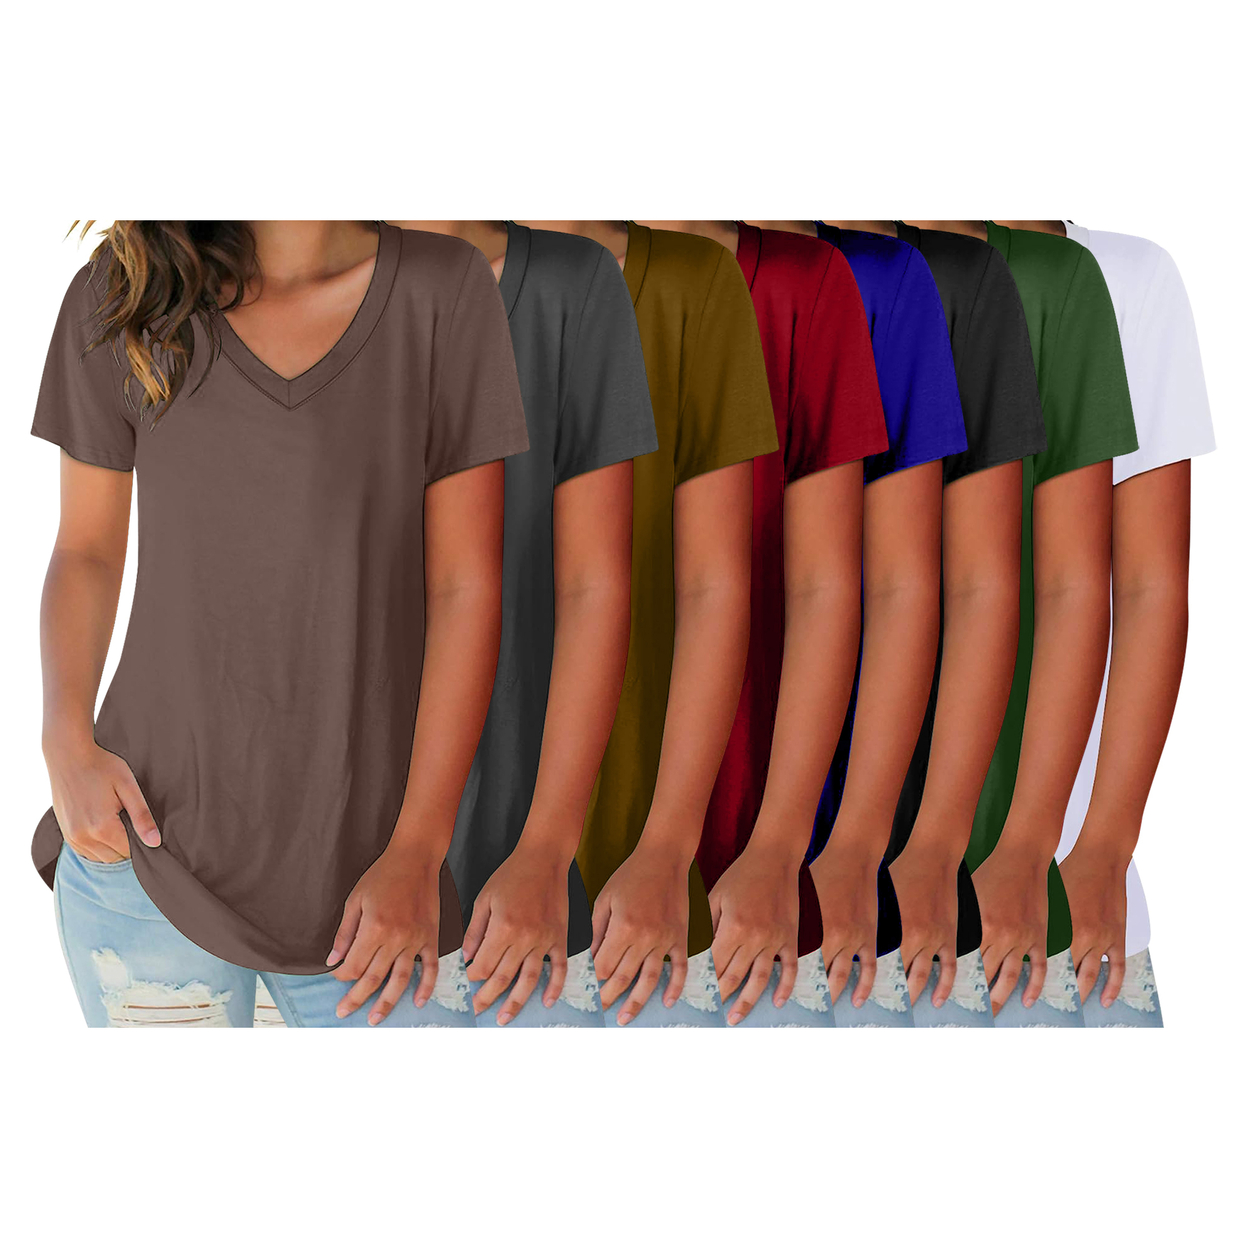 4-Pack: Women's Ultra Soft Smooth Cotton Blend Basic V-Neck Short Sleeve Shirts - X-large